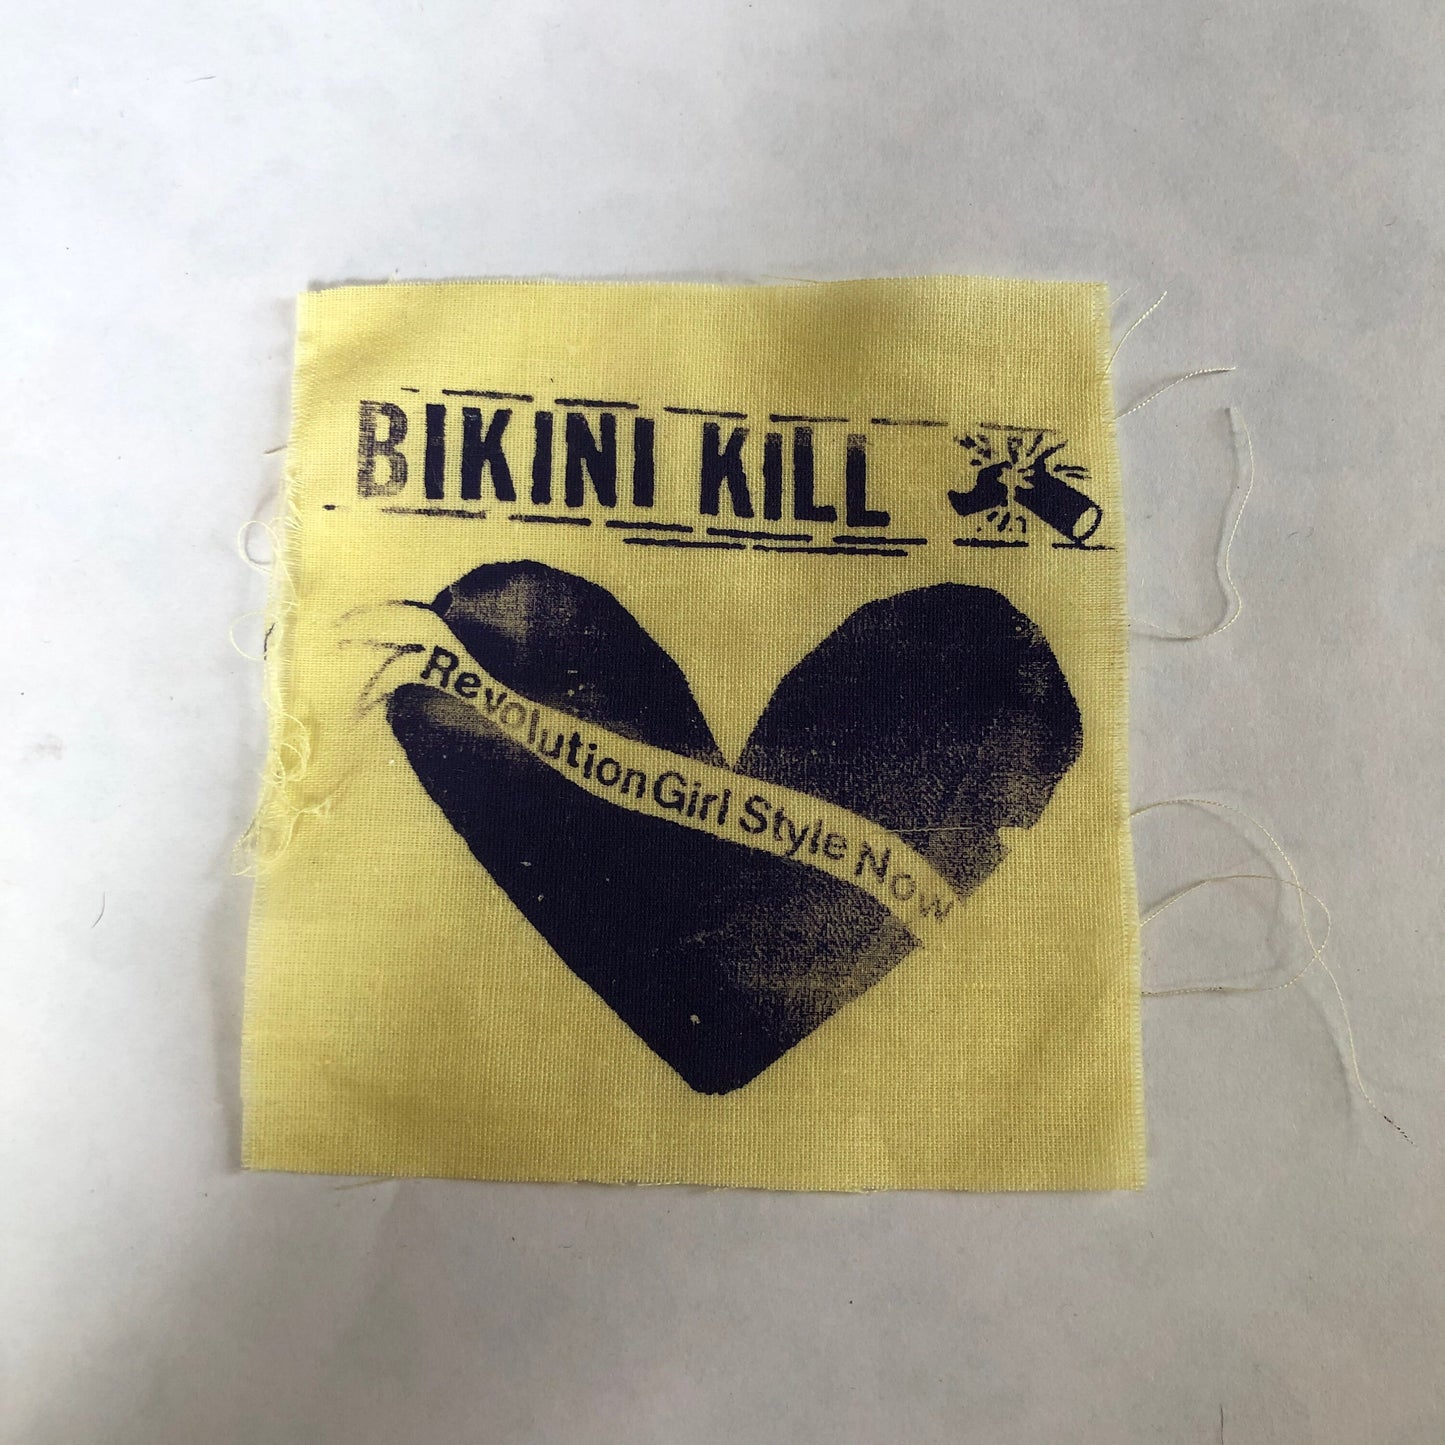 Bikini Kill “Revolution Girl Style Now” Heart Patch